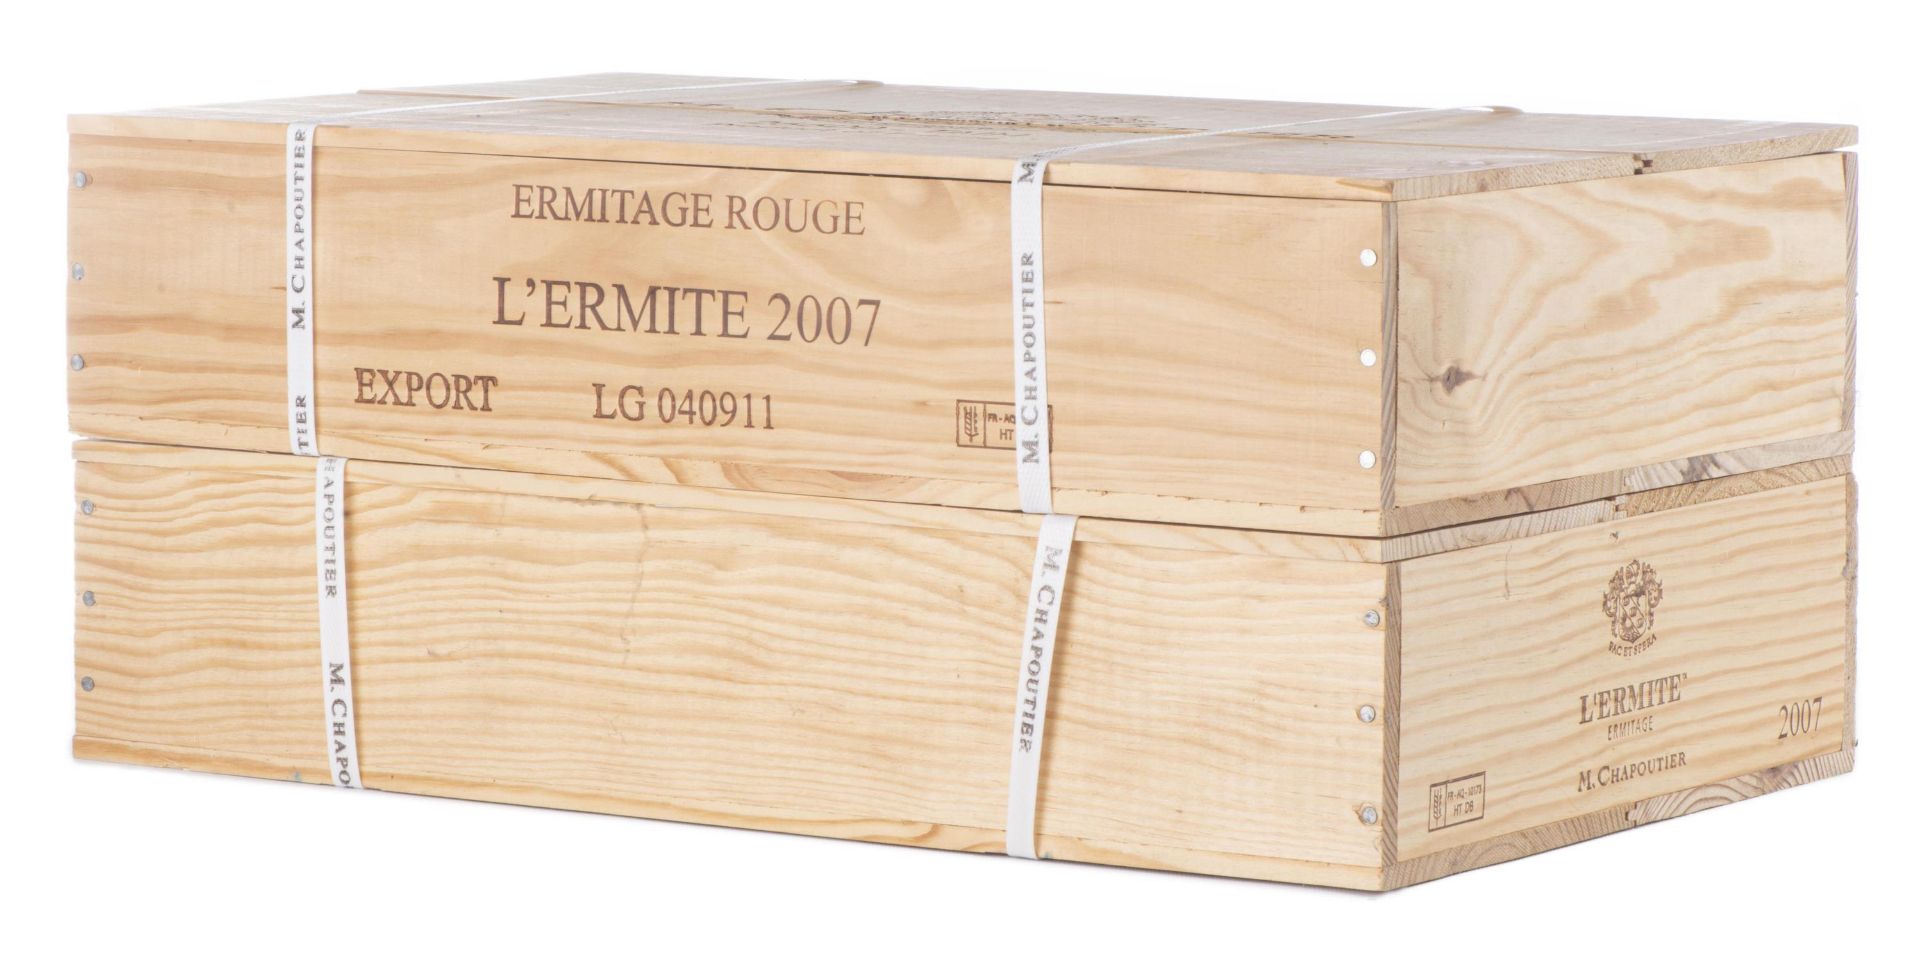 M. Chapoutier, Ermitage «L’Ermite», 2007 - Image 3 of 4